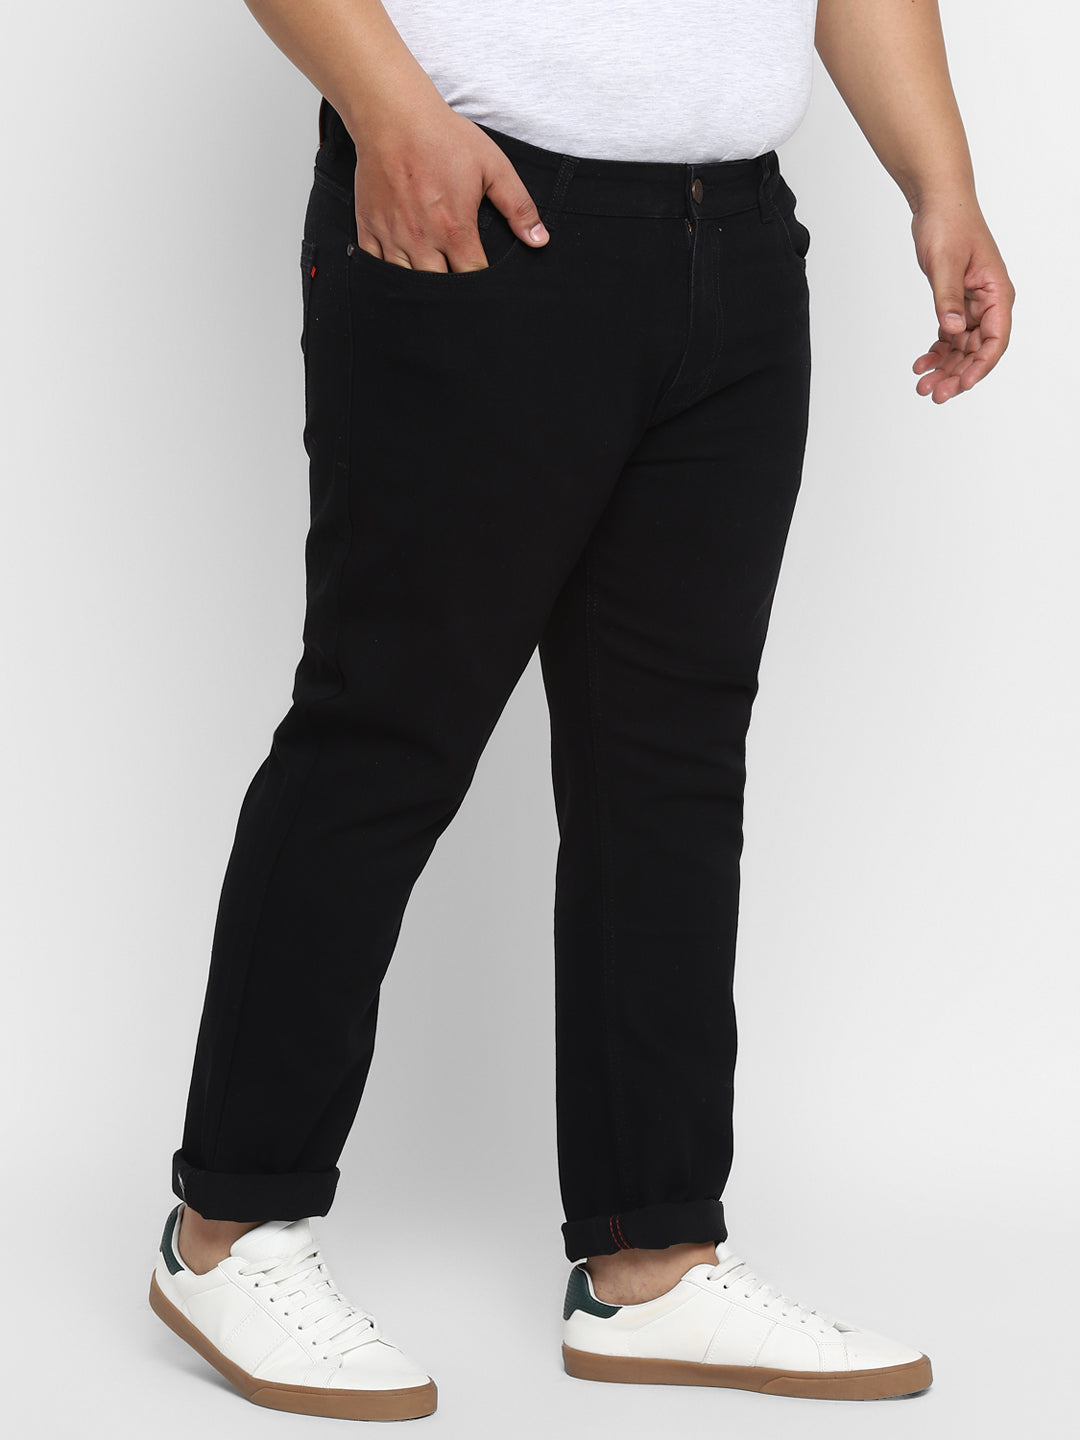 Urbano Plus Men's Black Regular Fit Denim Jeans Stretchable